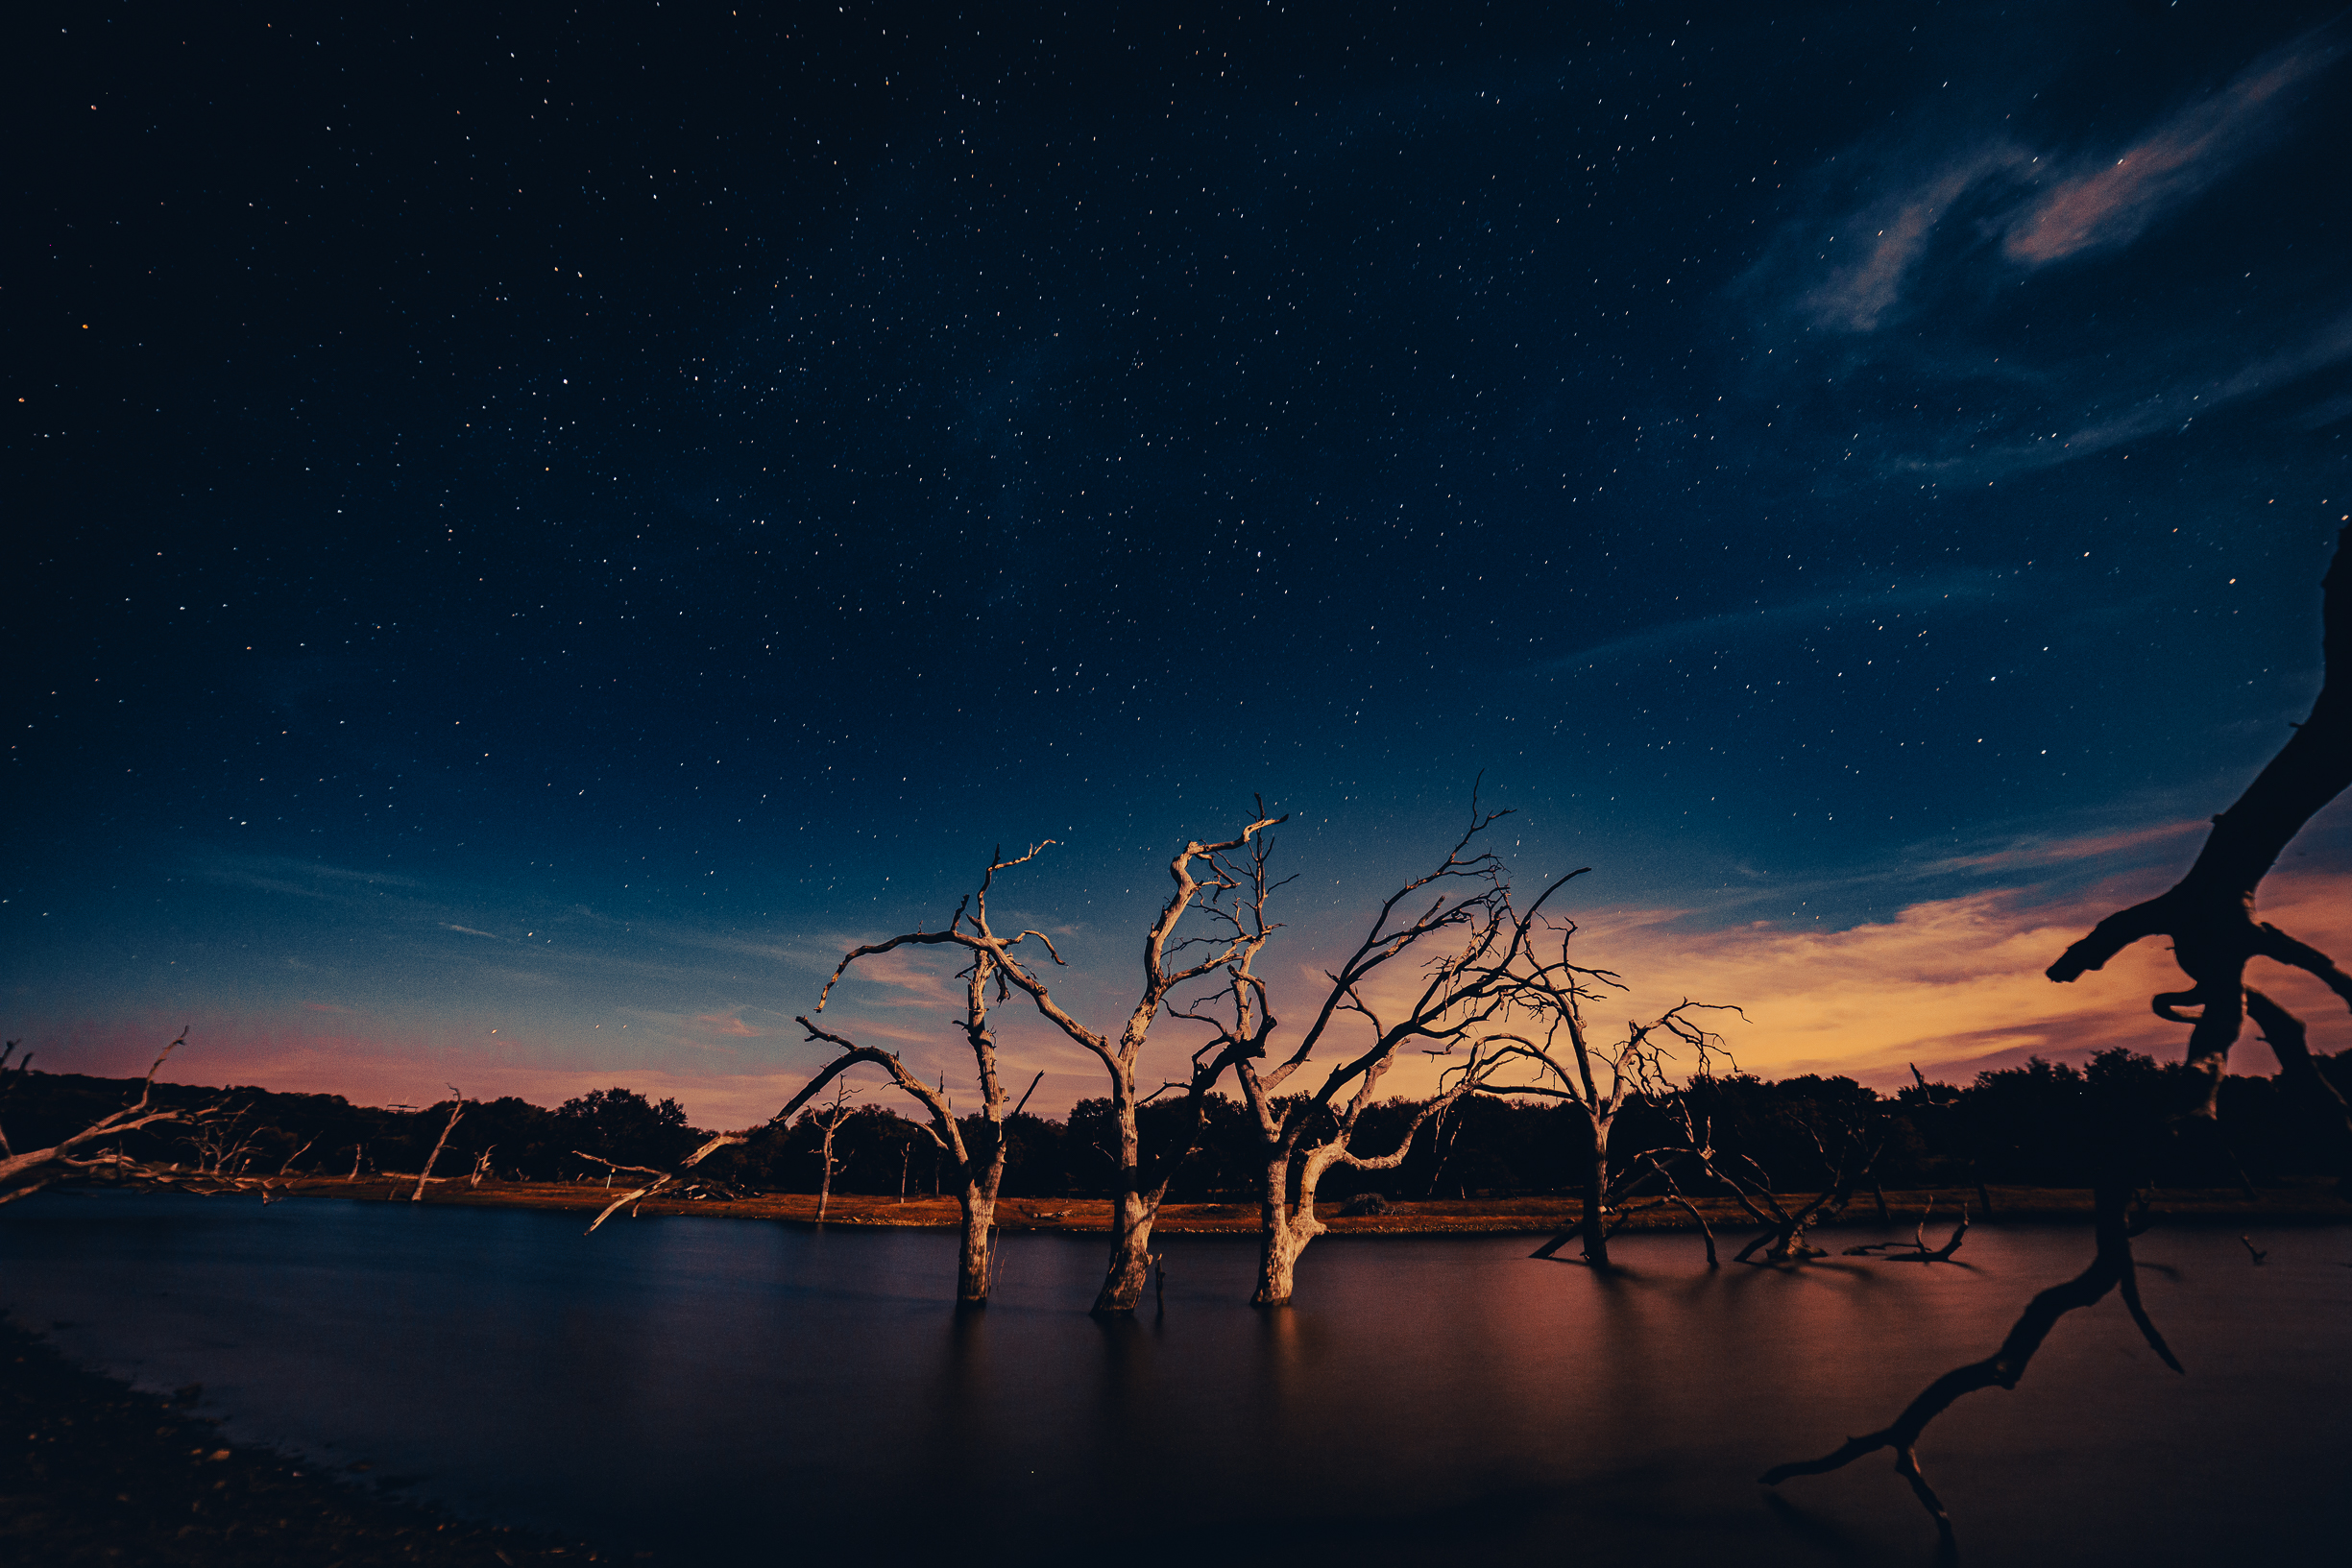 RPR lake trees under the stars